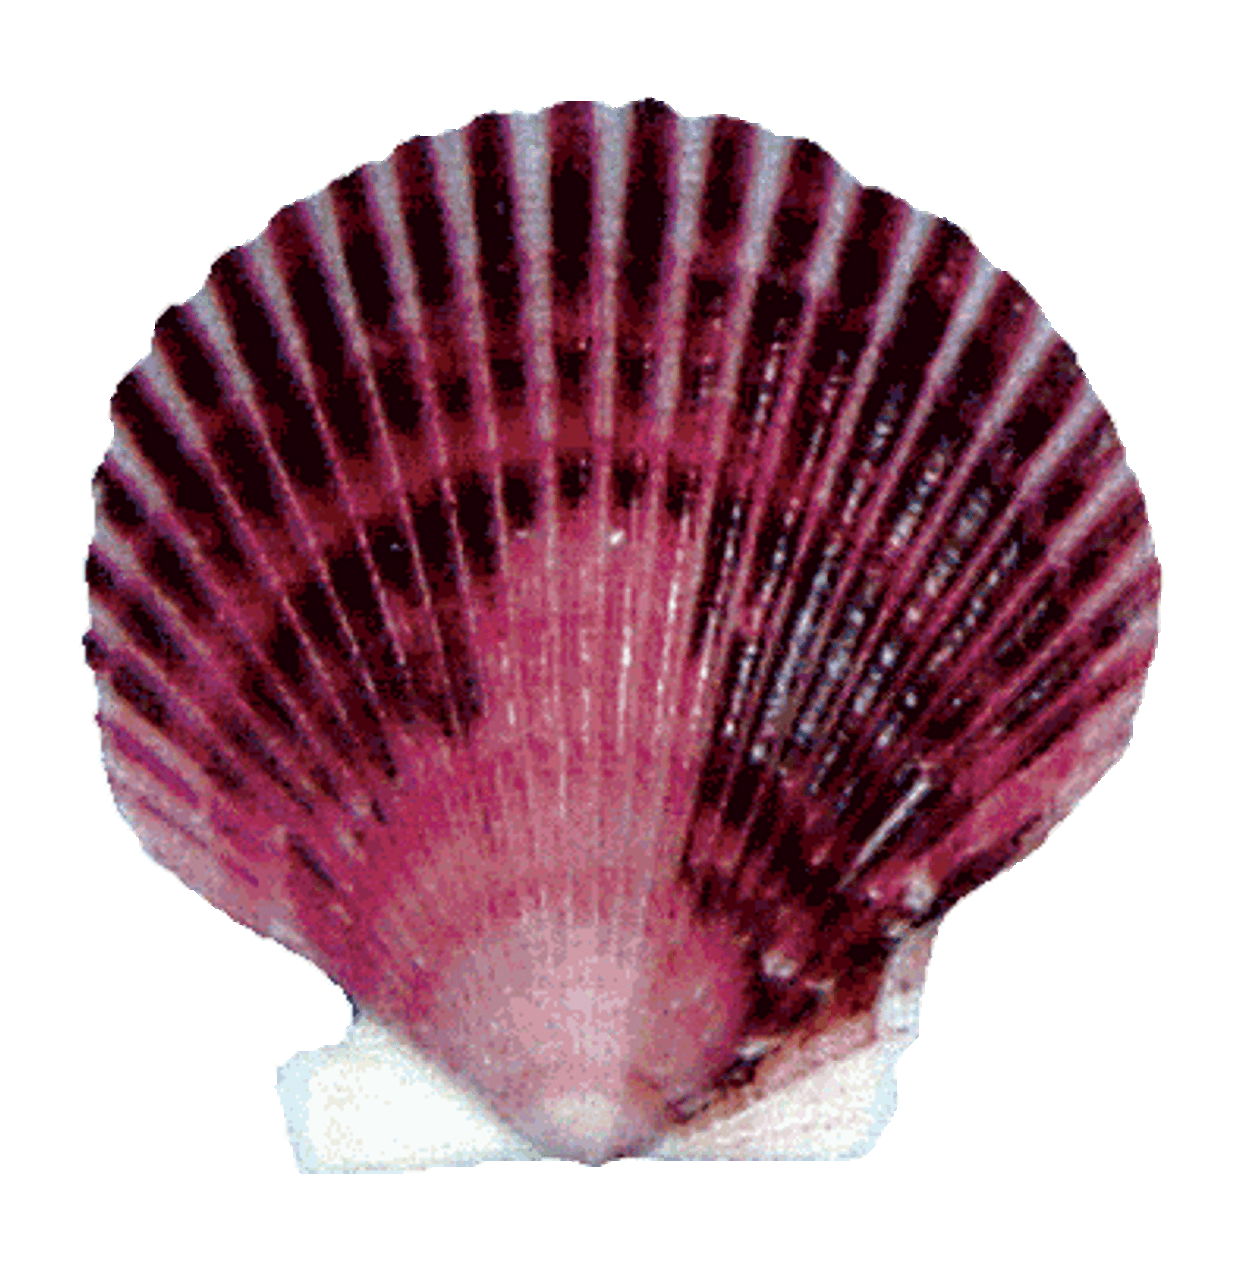 COLORFUL SCALLOP SHELL  Sea shells, Scallop shells, Types of shells